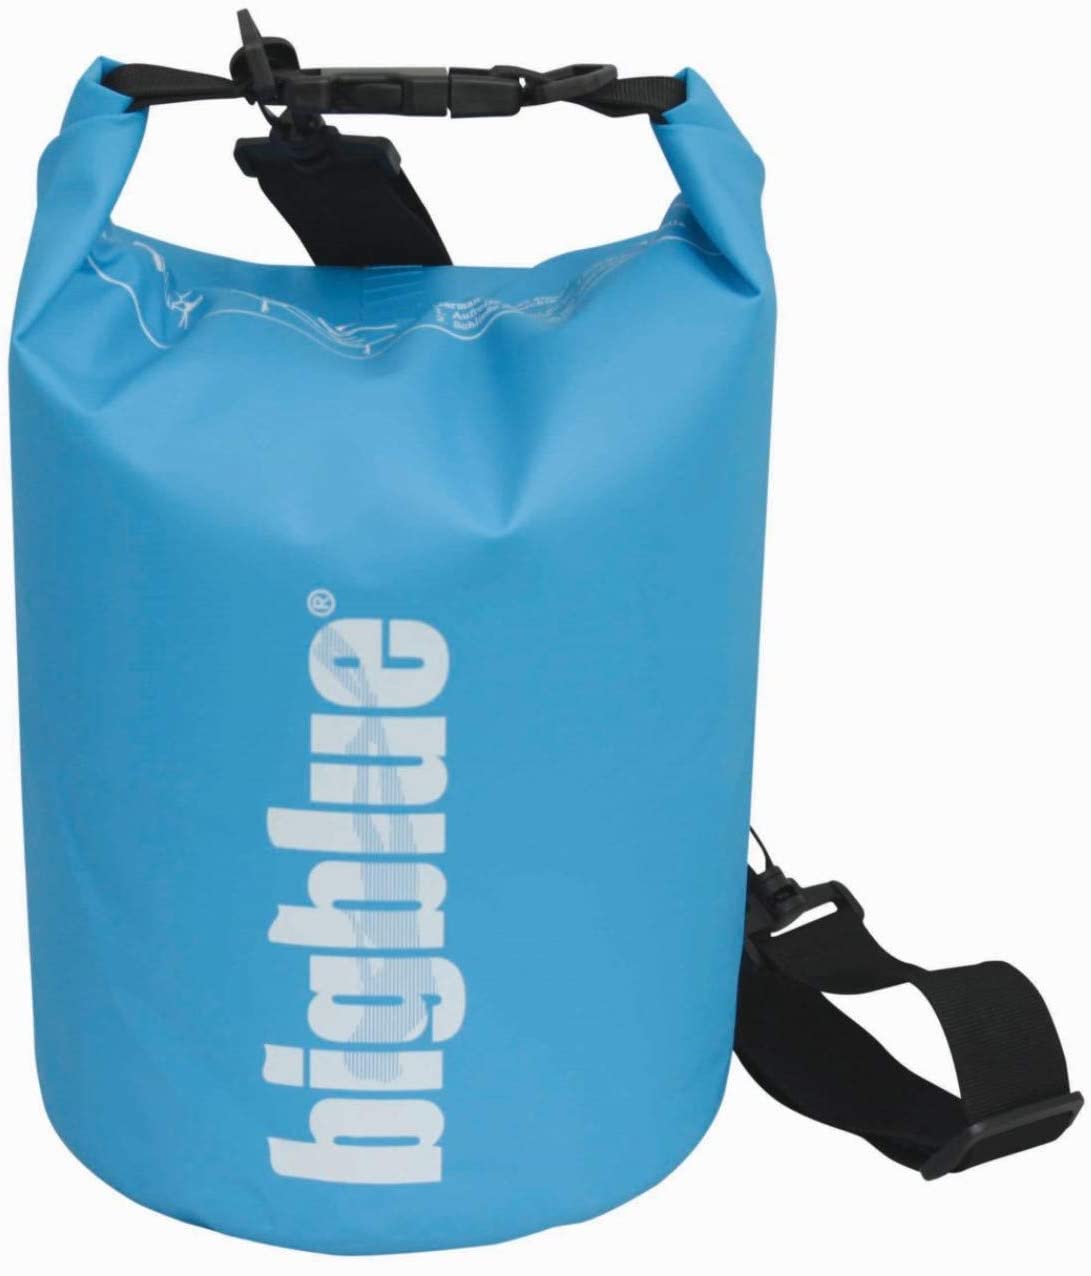 BigBlue Outdoor Dry Bag, 3L Size, Light Blue-